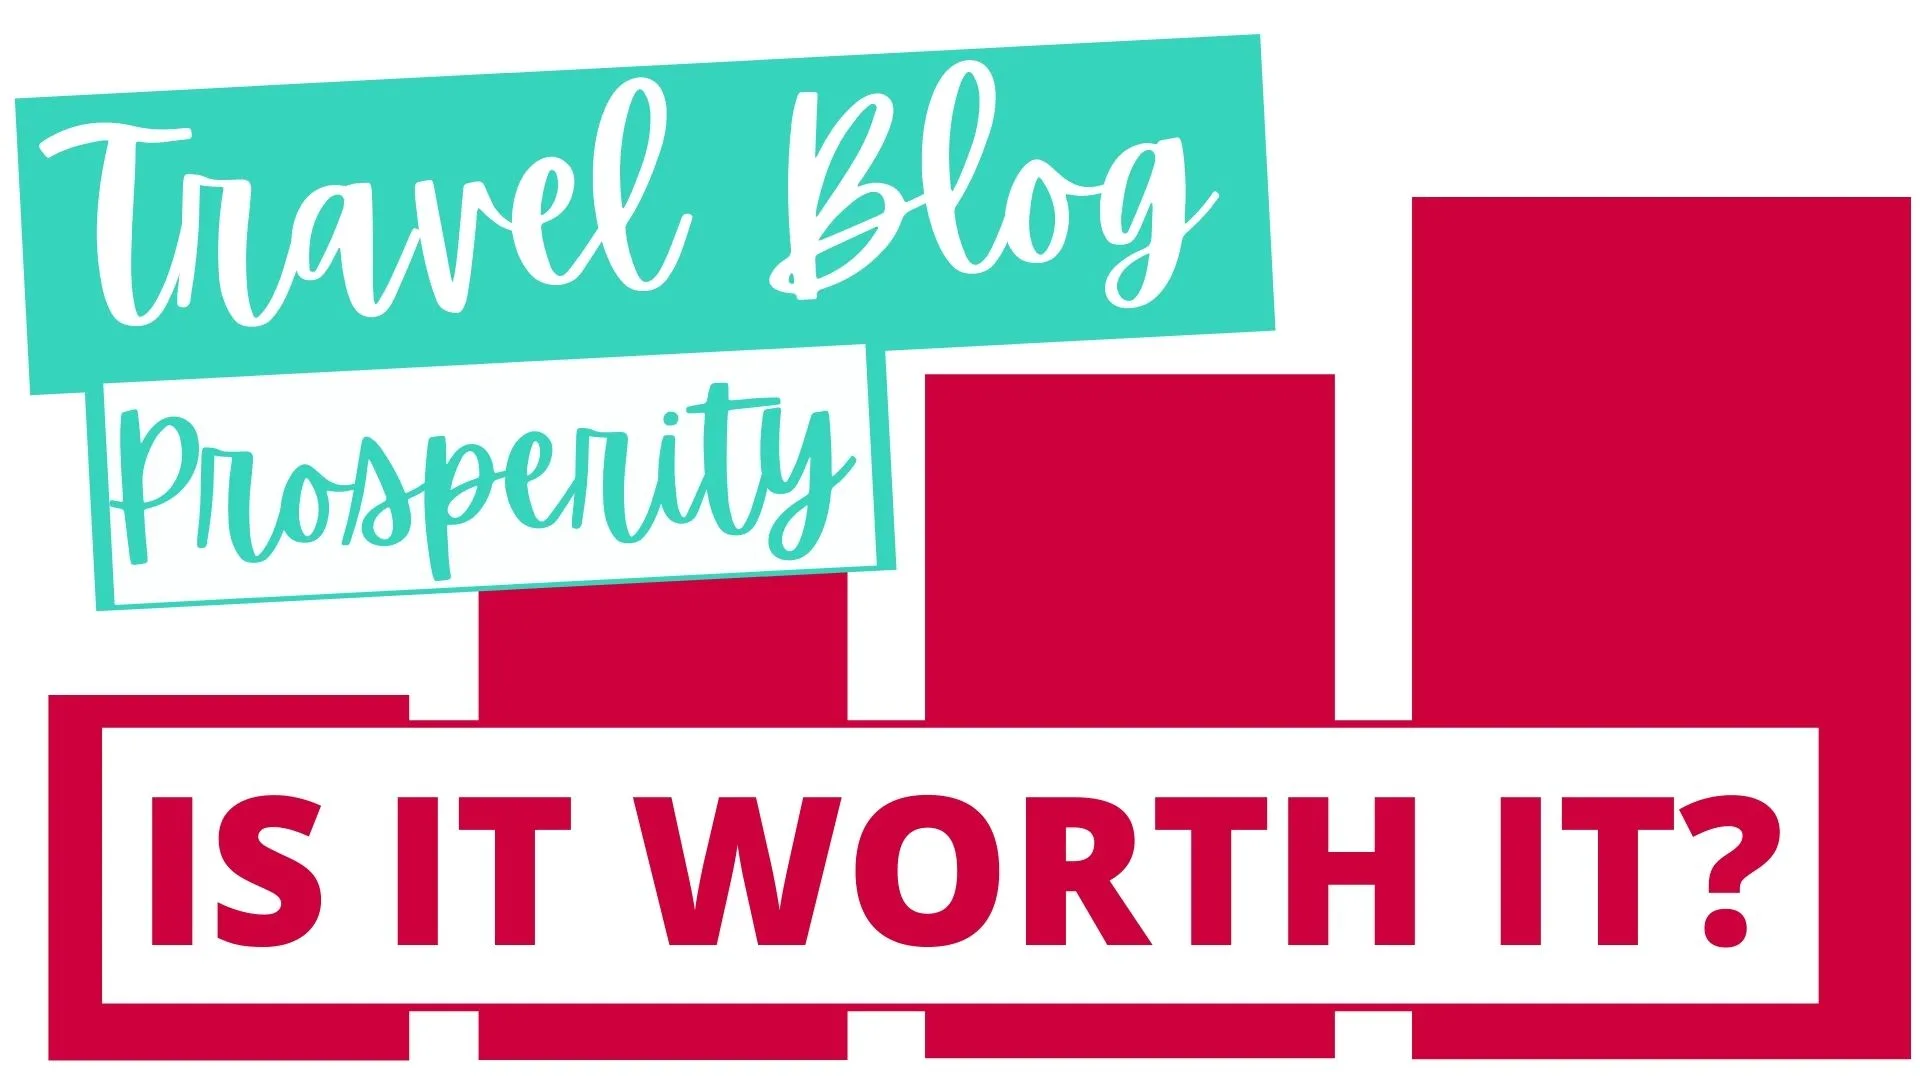 Travel Blog Prosperity Review